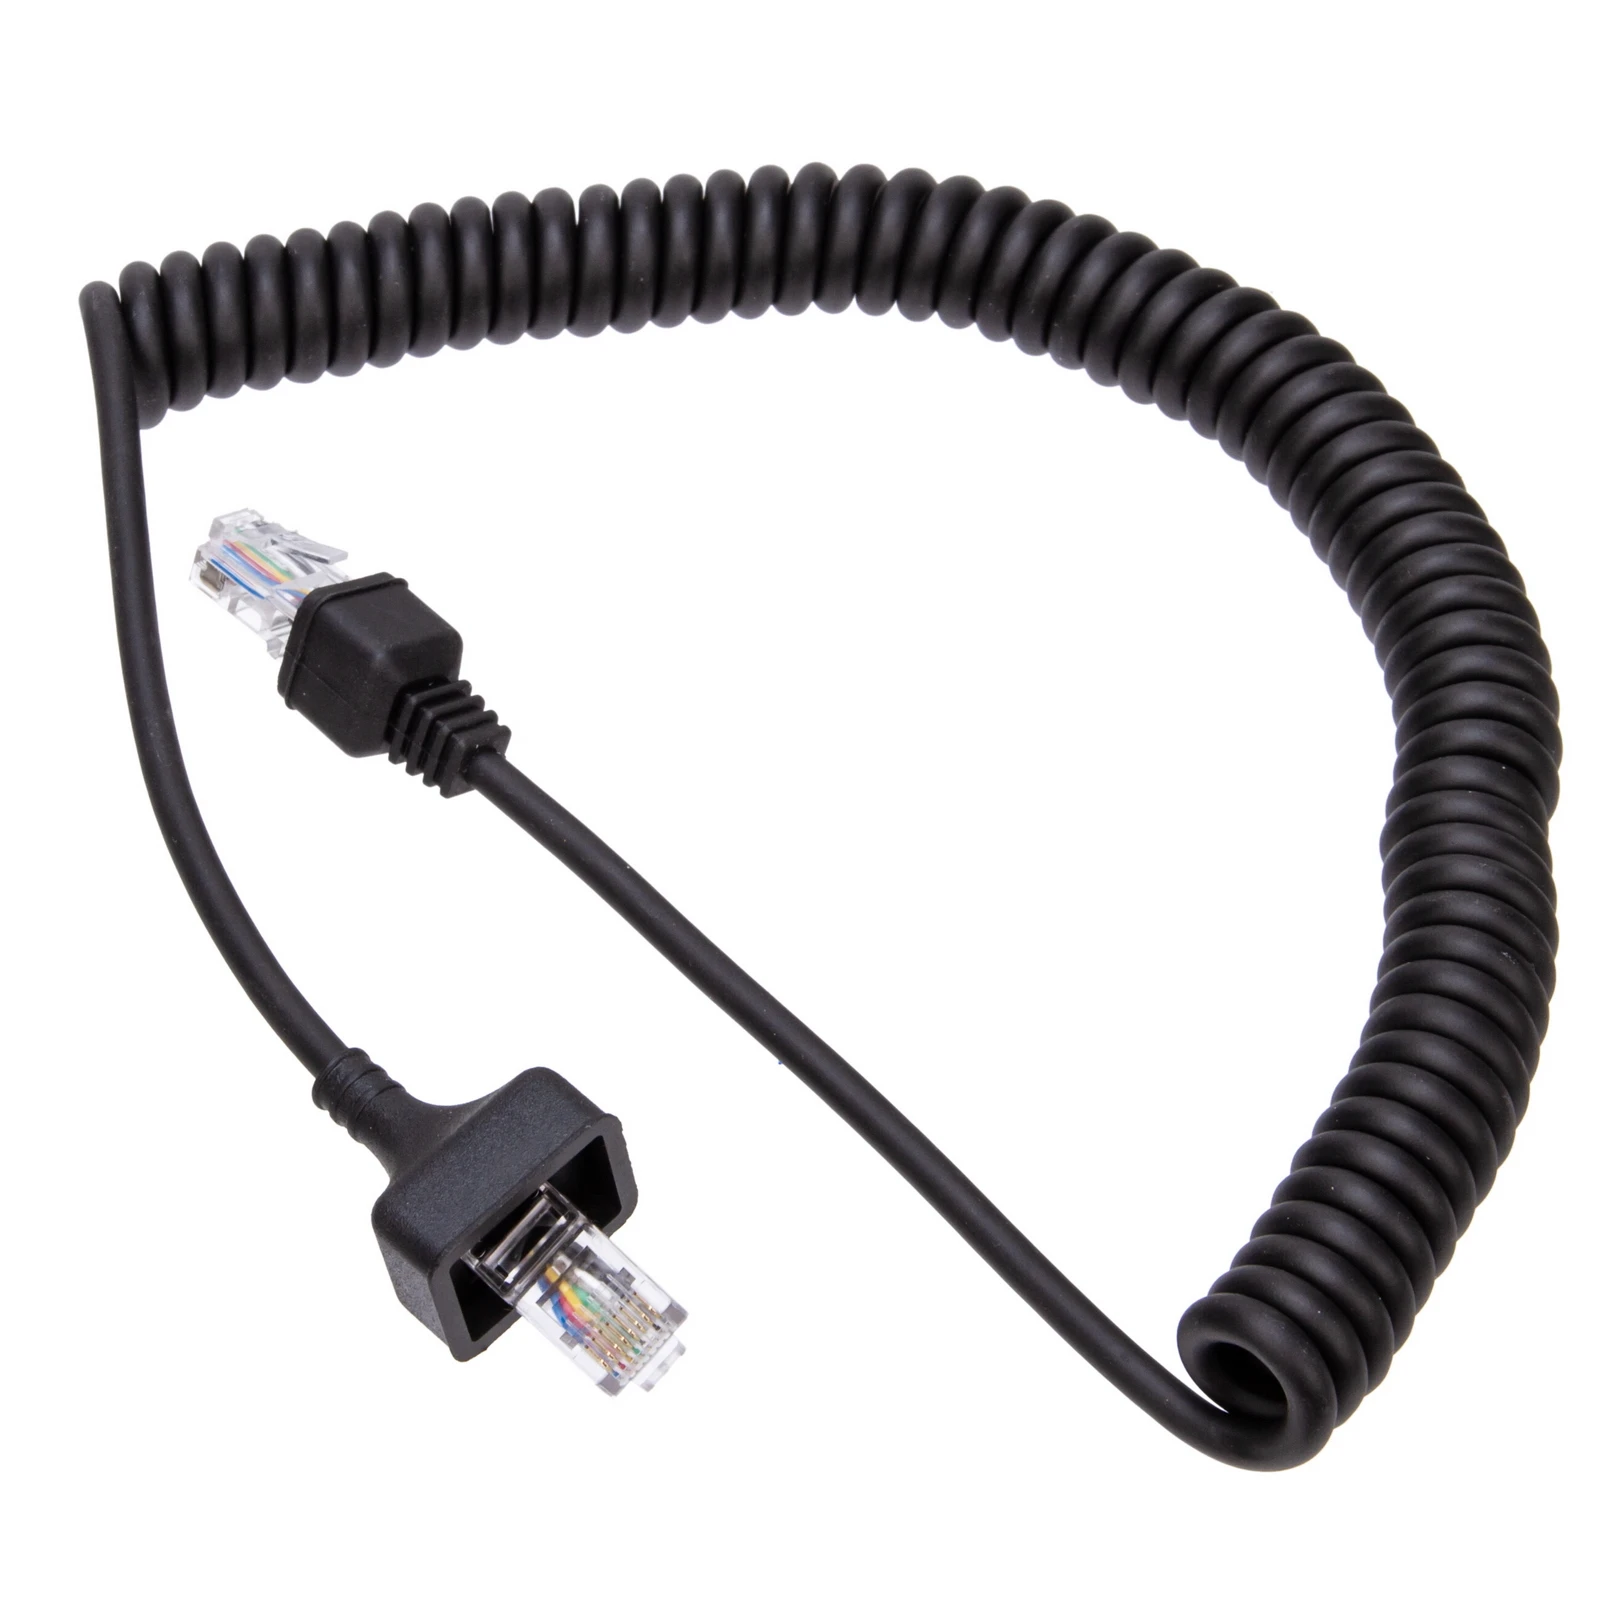 8 Pin Replacement Handheld Ridao Speaker Mic Microphone Cable for KMC-30 Kenwood TK-863 TK-863G TK-868 TK-880 Walkie Talkie